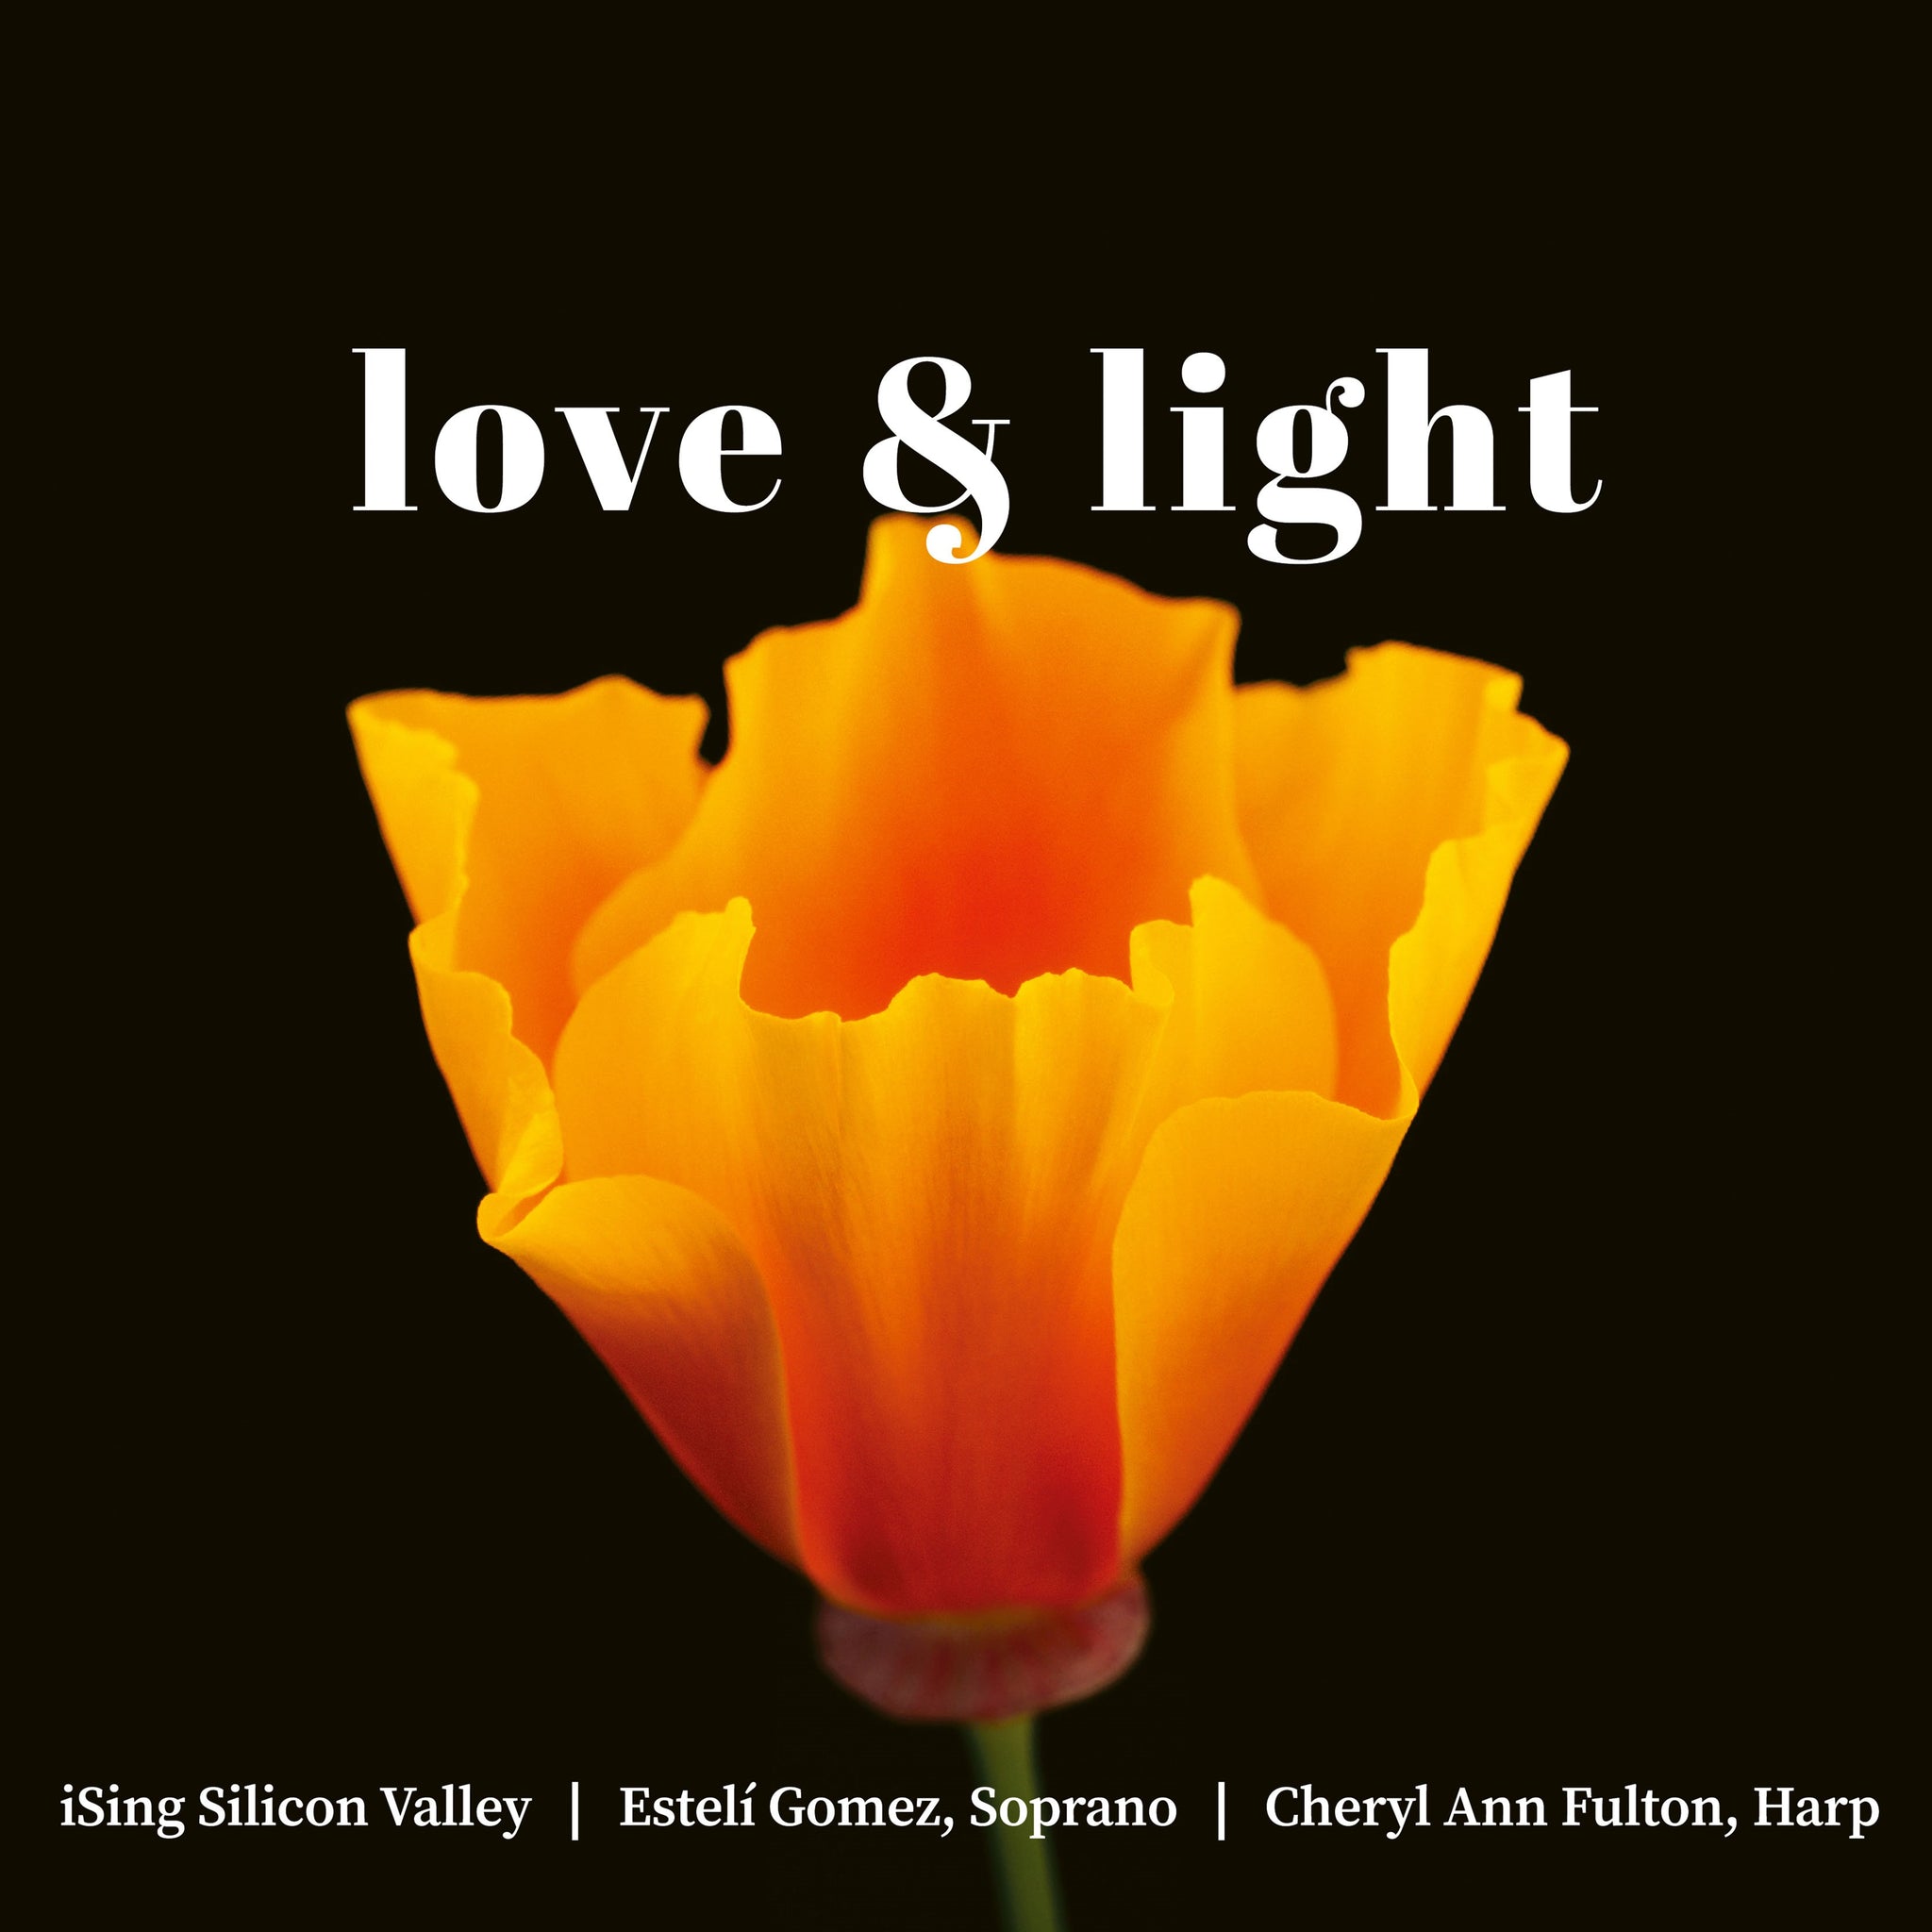 love & light / Gomez, Fulton, iSing Silicon Valley